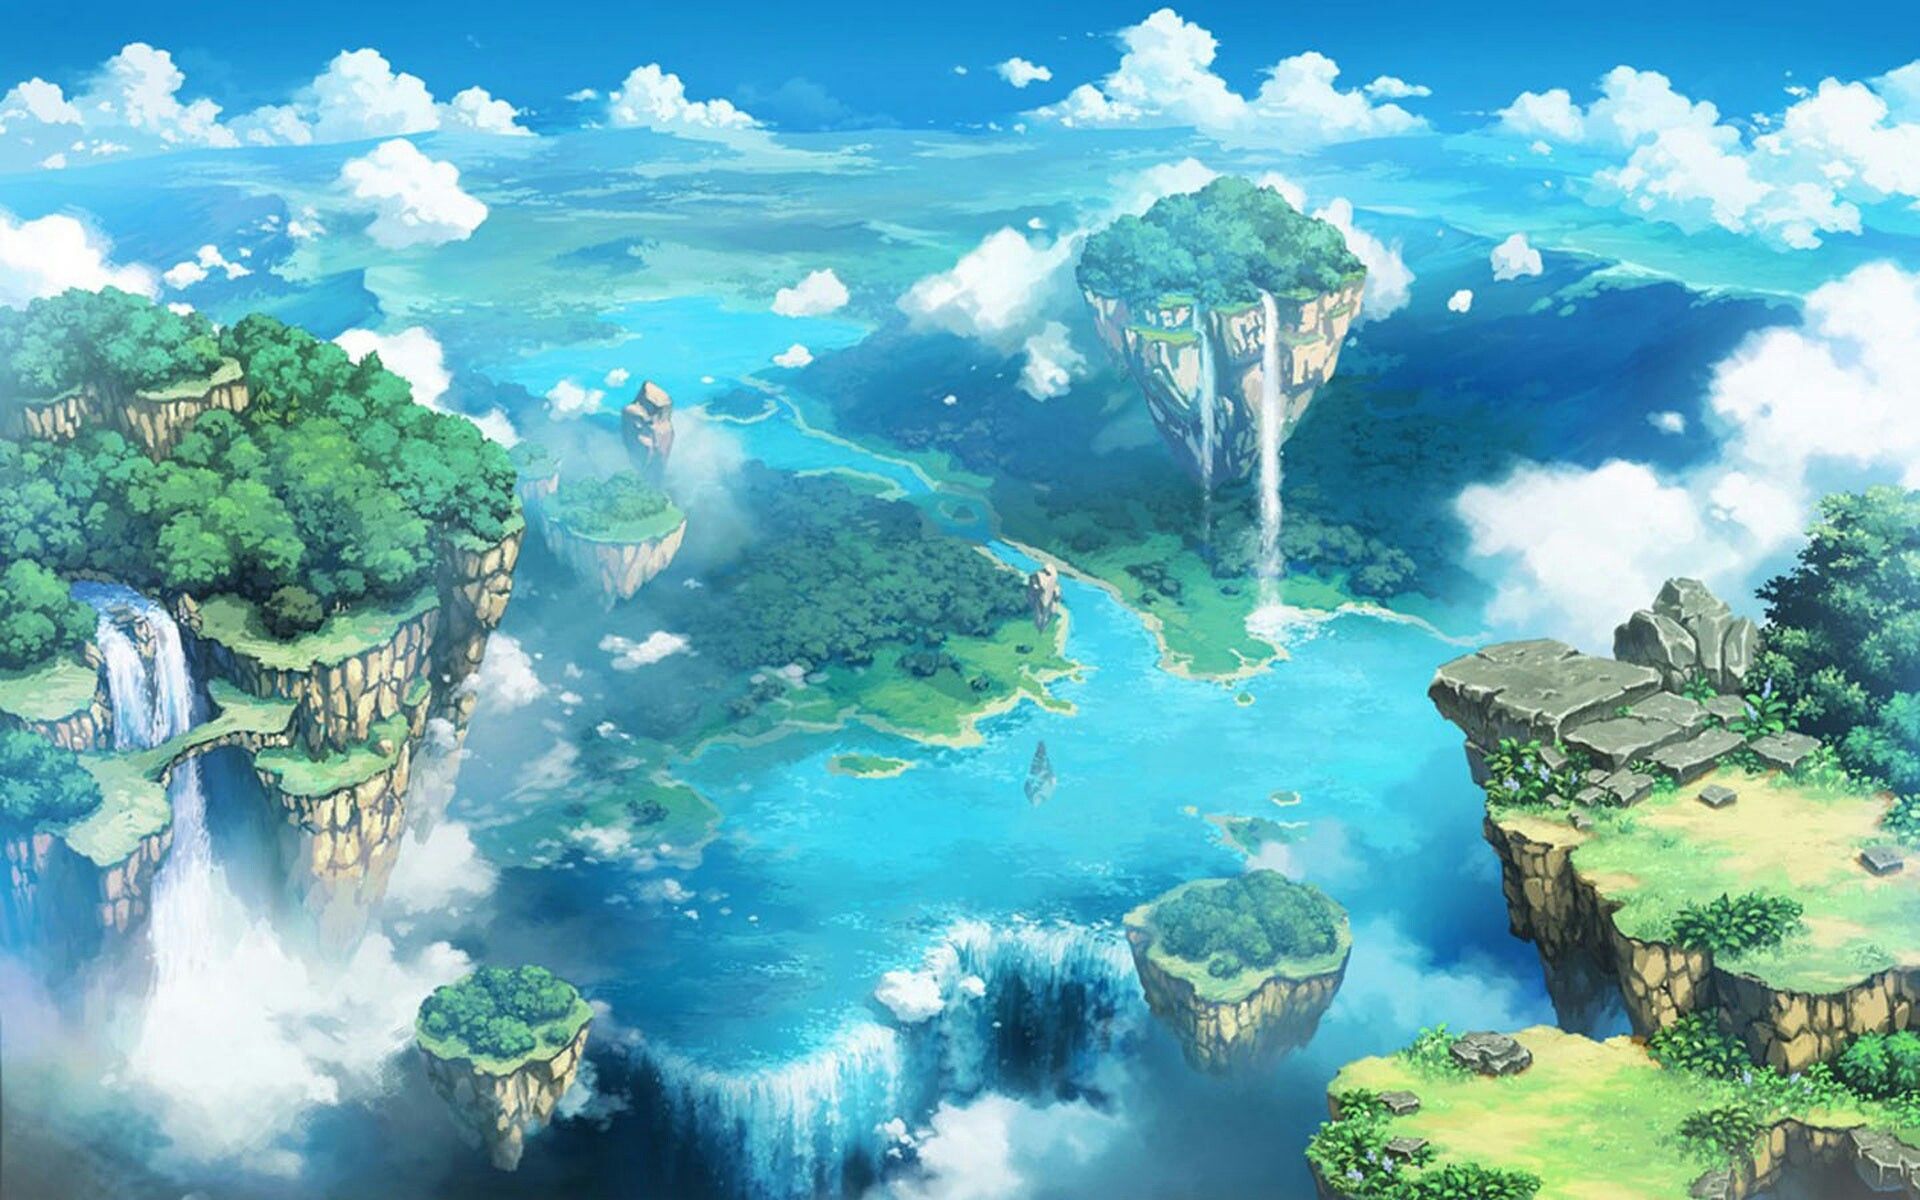 Aesthetic Anime Landscape Wallpapers - Wallpaper Cave C09 | Anime scenery,  Landscape wallpaper, Anime background